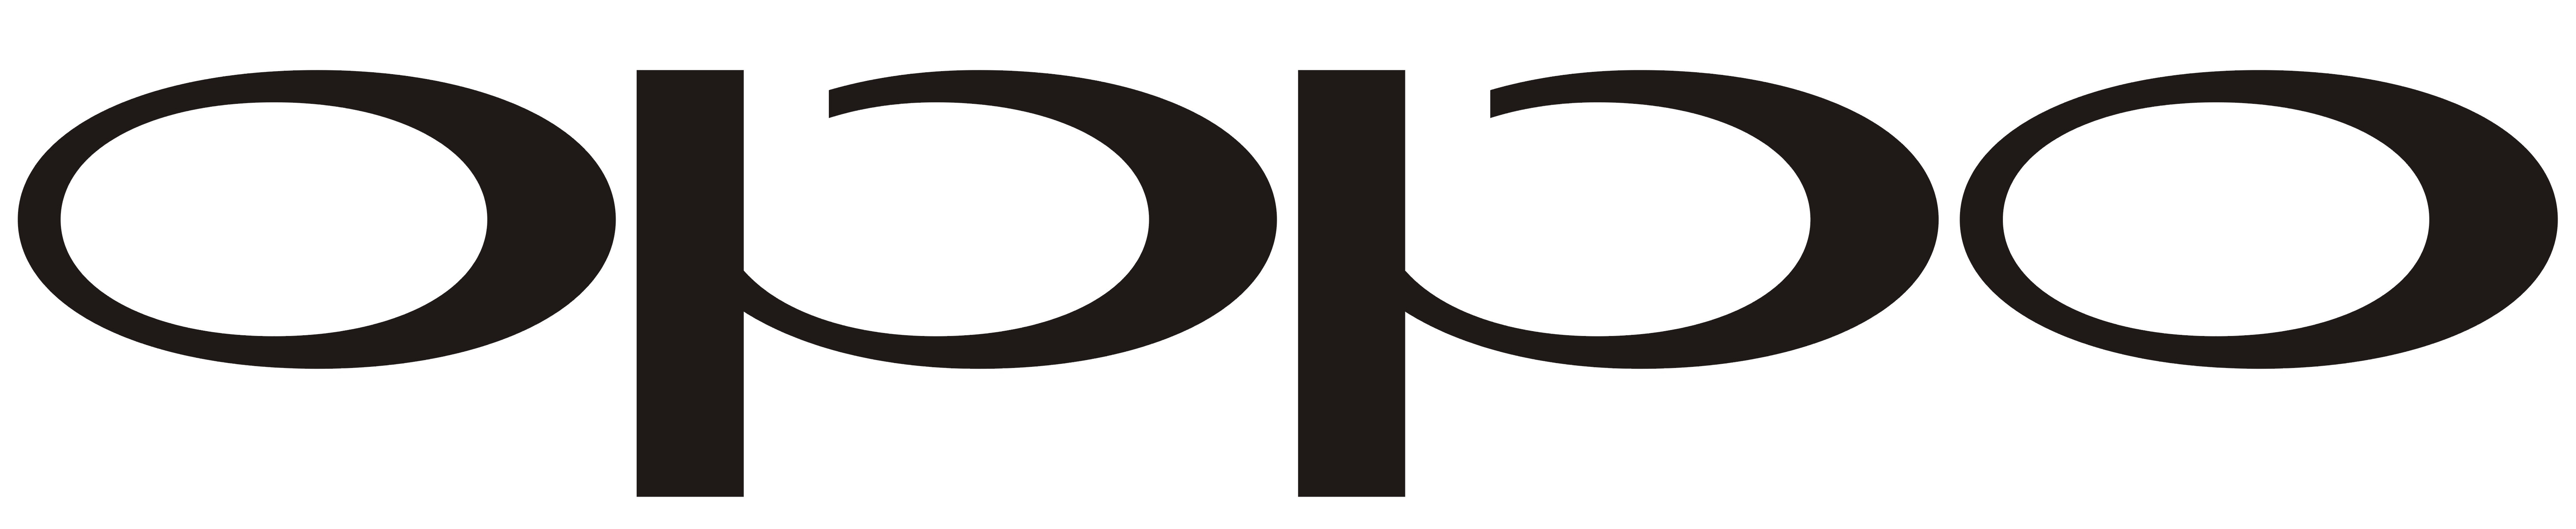 oppo-vector-logo